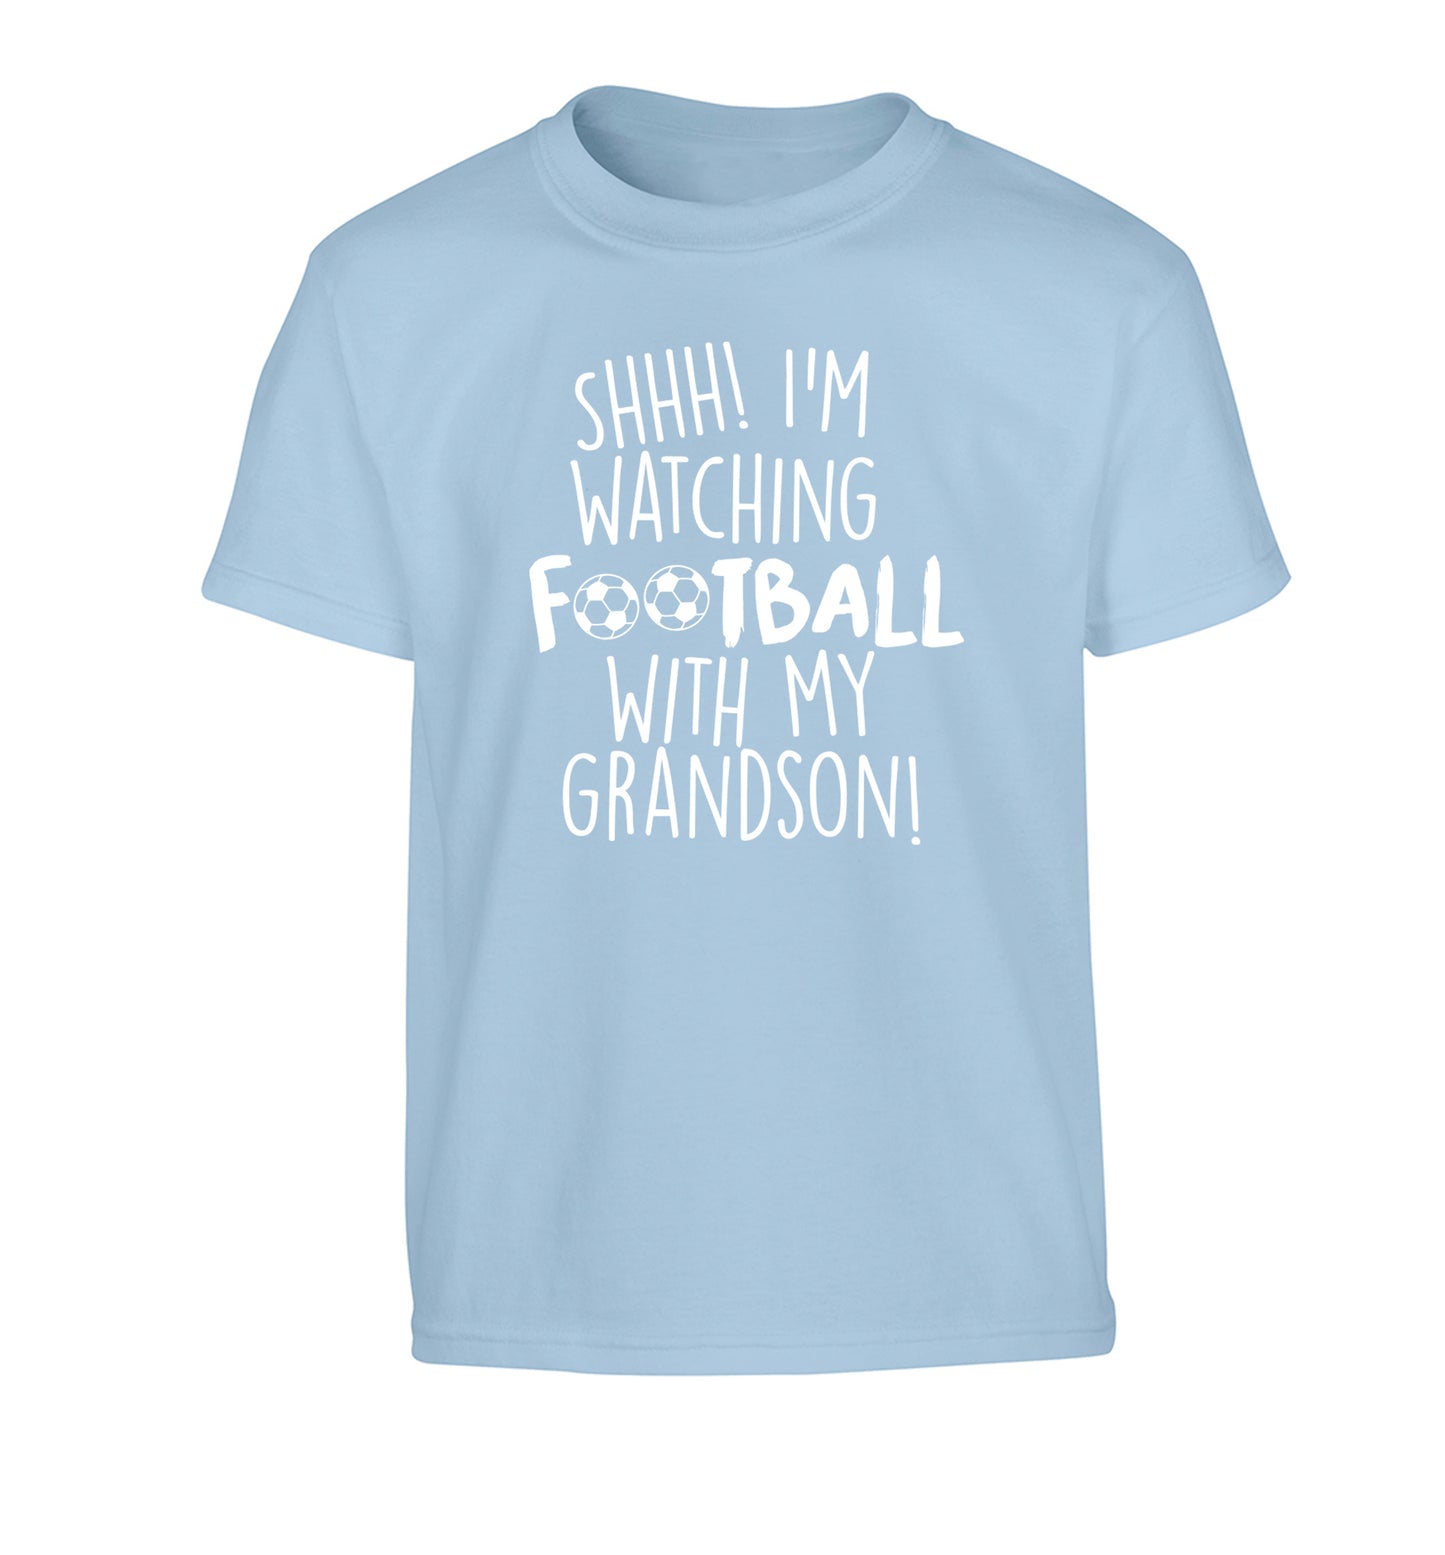 Shhh I'm watching football with my grandson Children's light blue Tshirt 12-14 Years